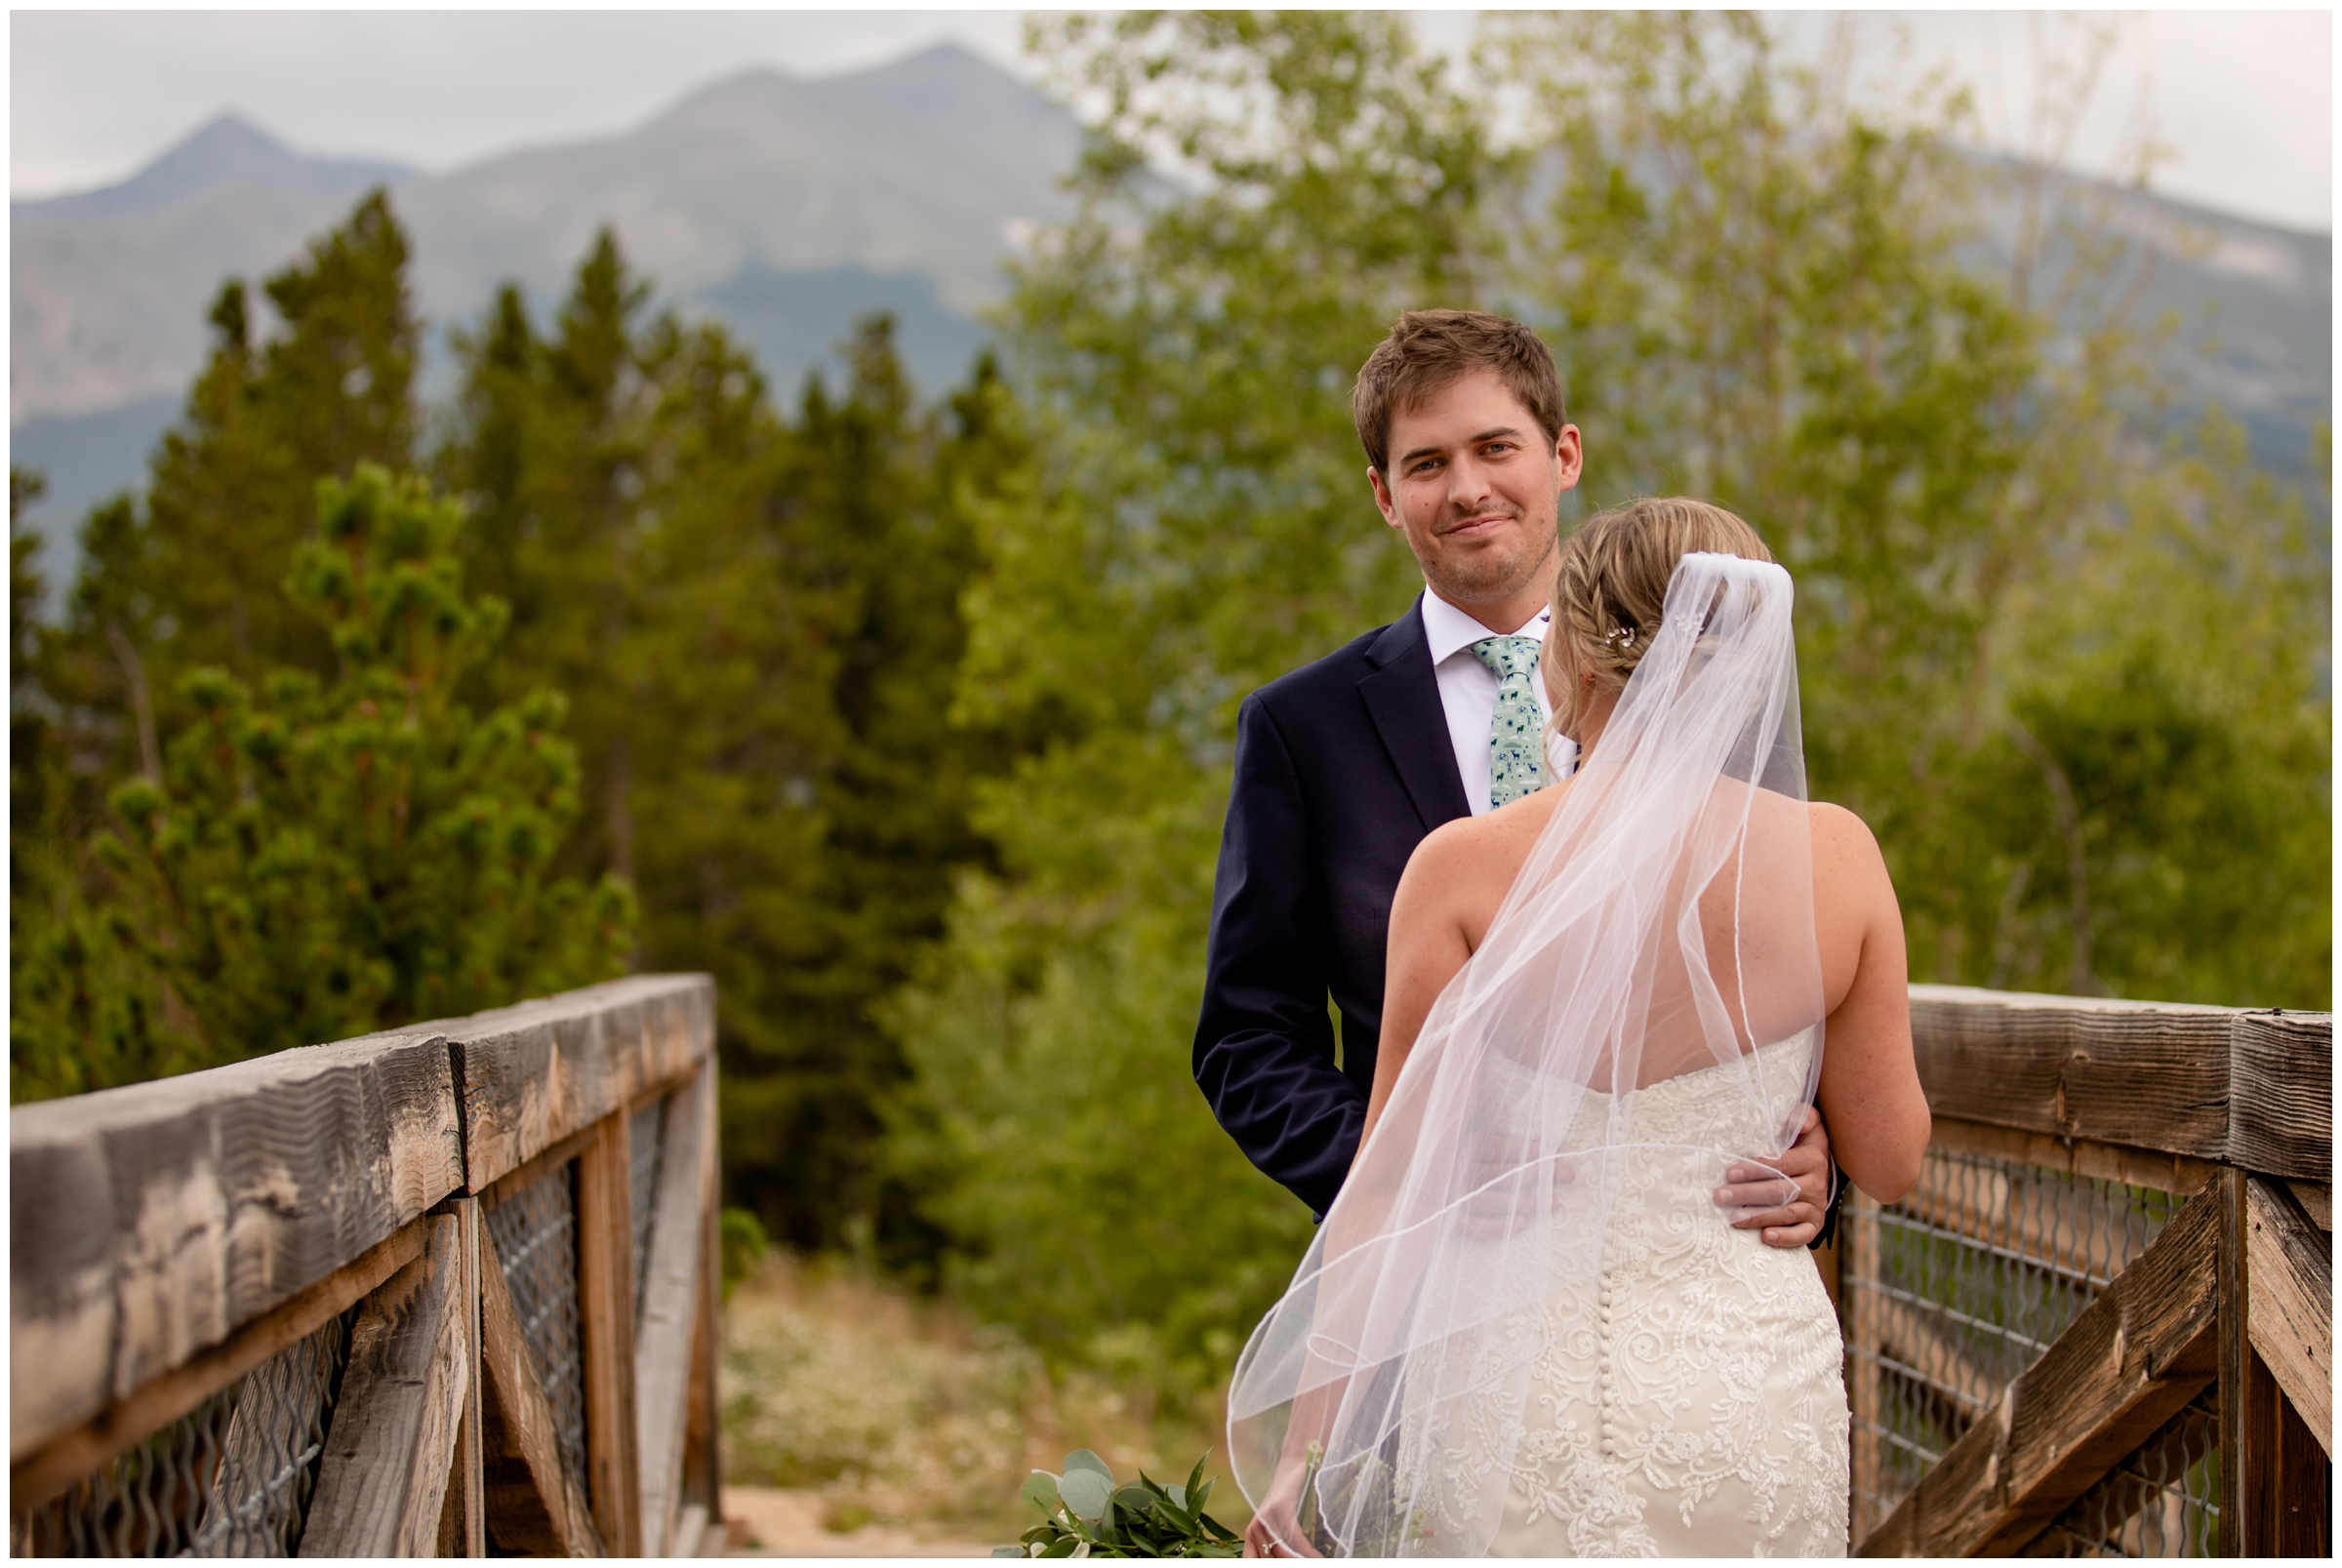 Lodge at Breckenridge wedding photos during summer by Colorado mountain photographer Plum Pretty Photography